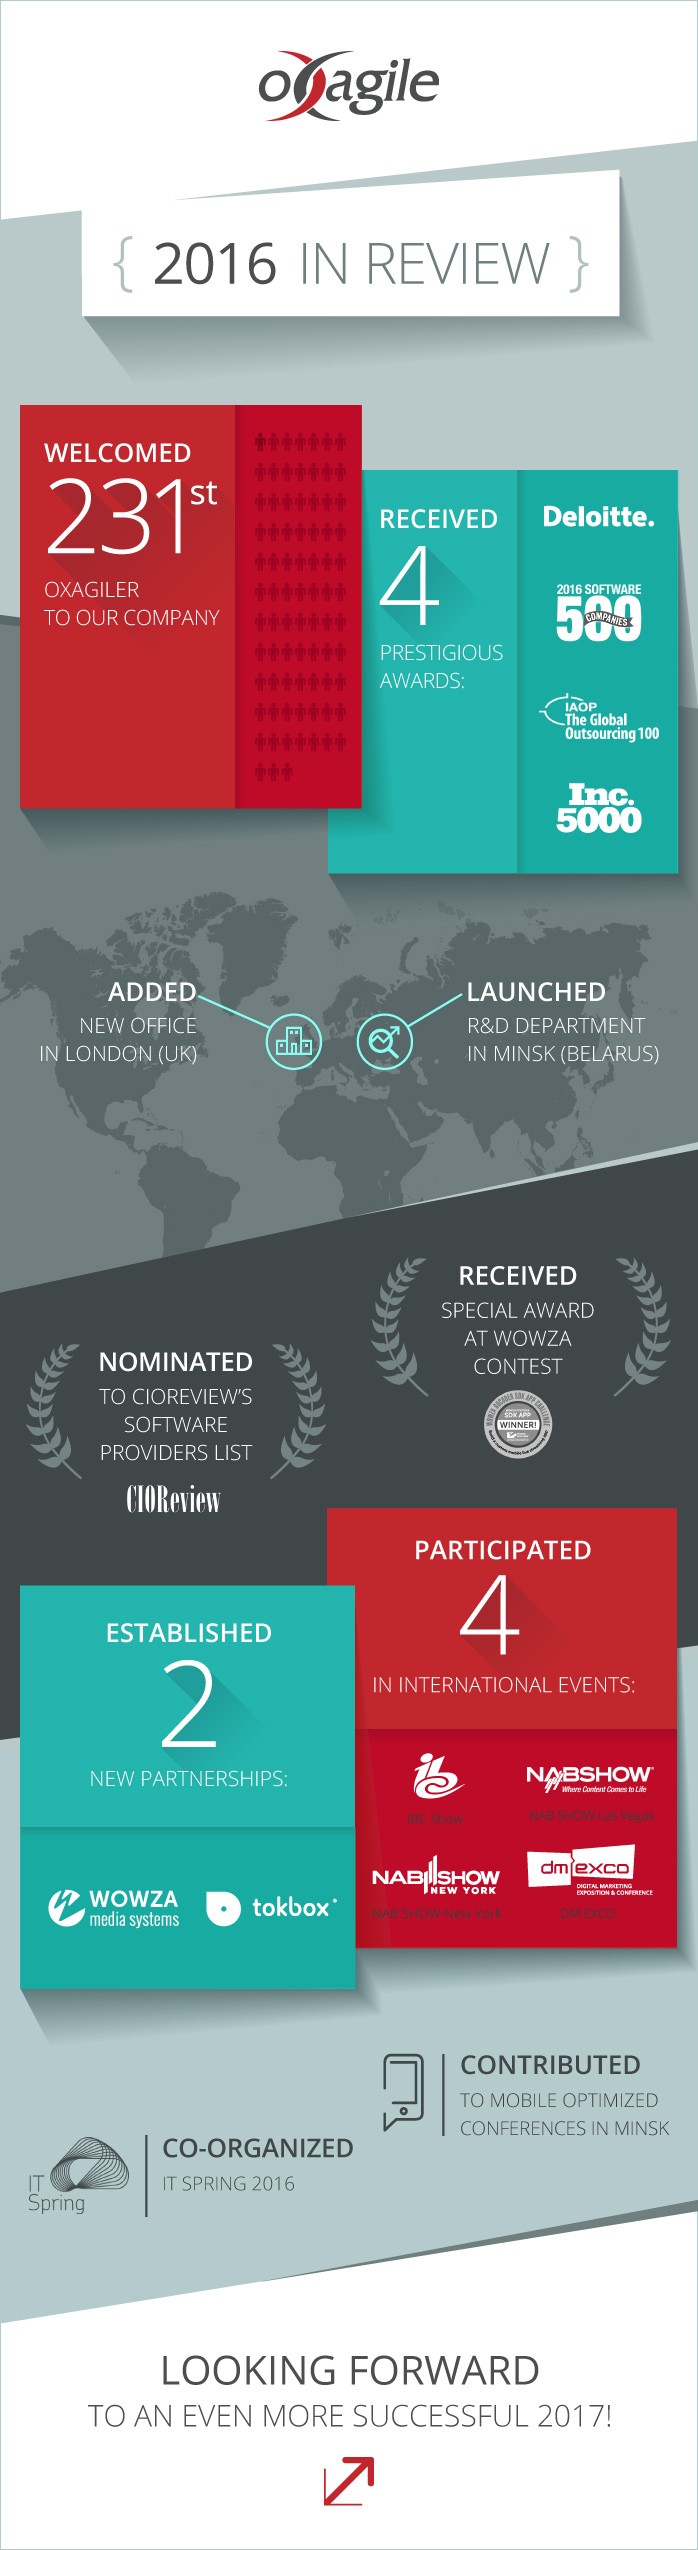 Oxagile executive summary 2016 infographic